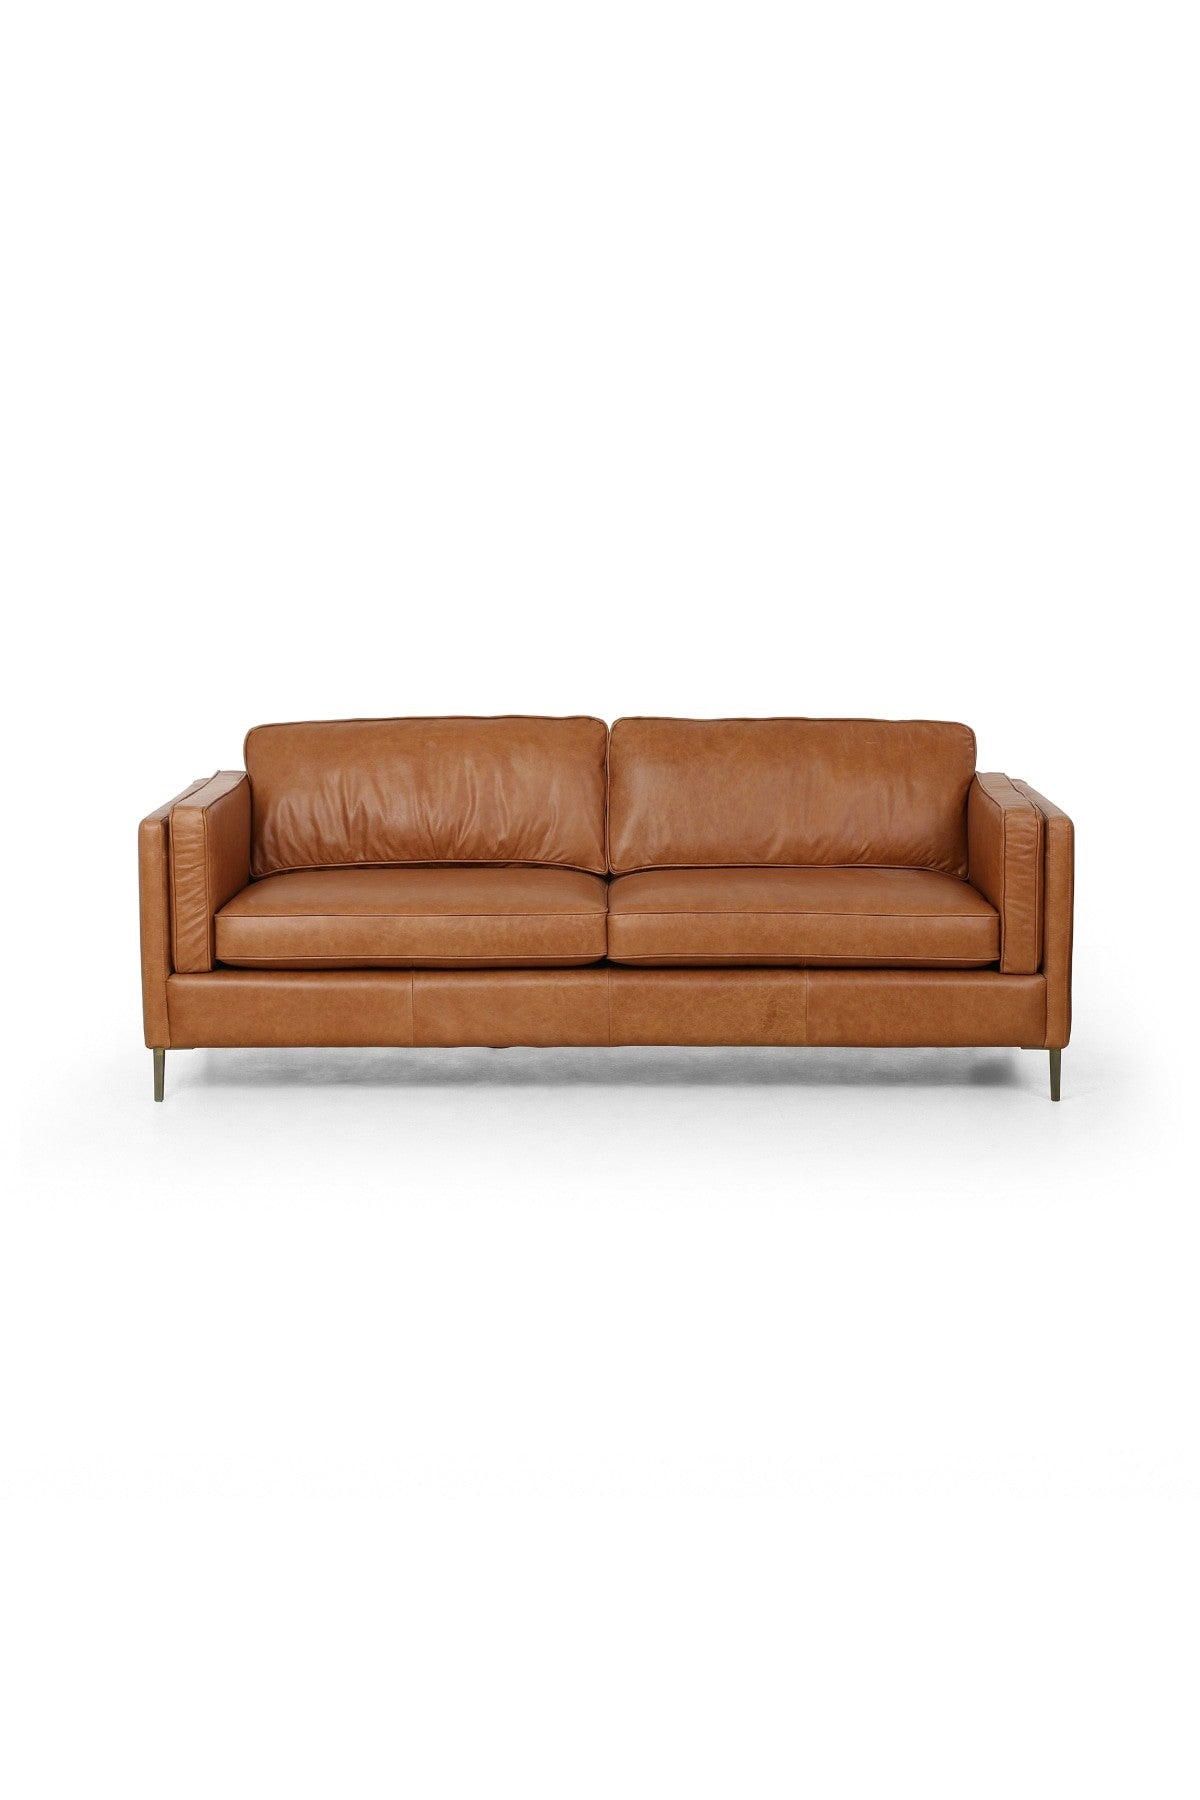 Emily Leather Sofa - 2 Colors